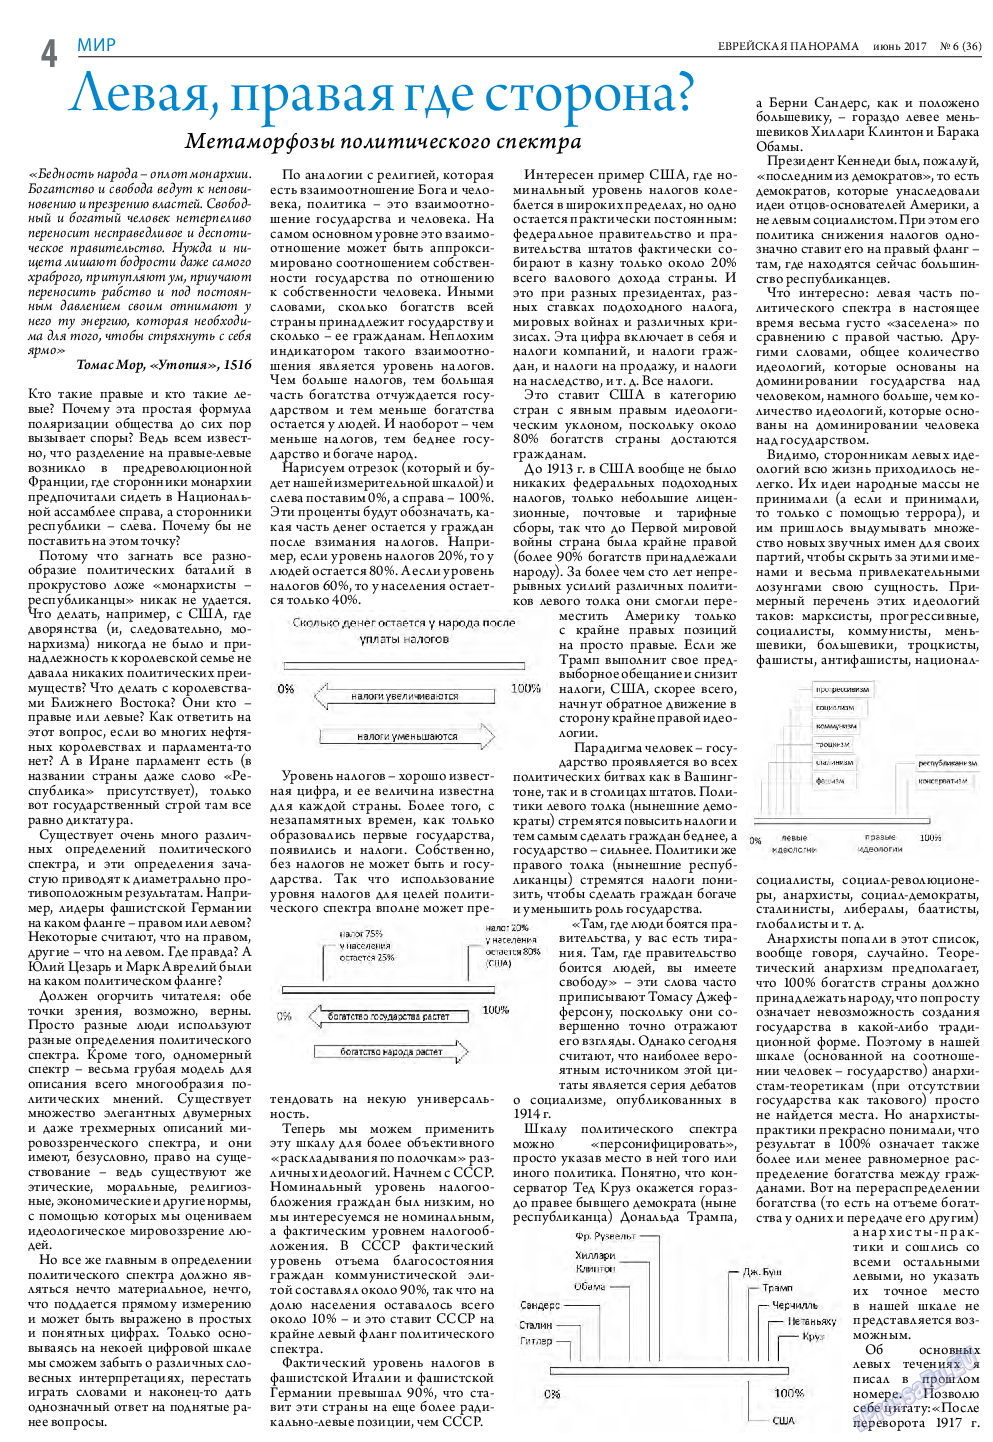 Еврейская панорама, газета. 2017 №6 стр.4